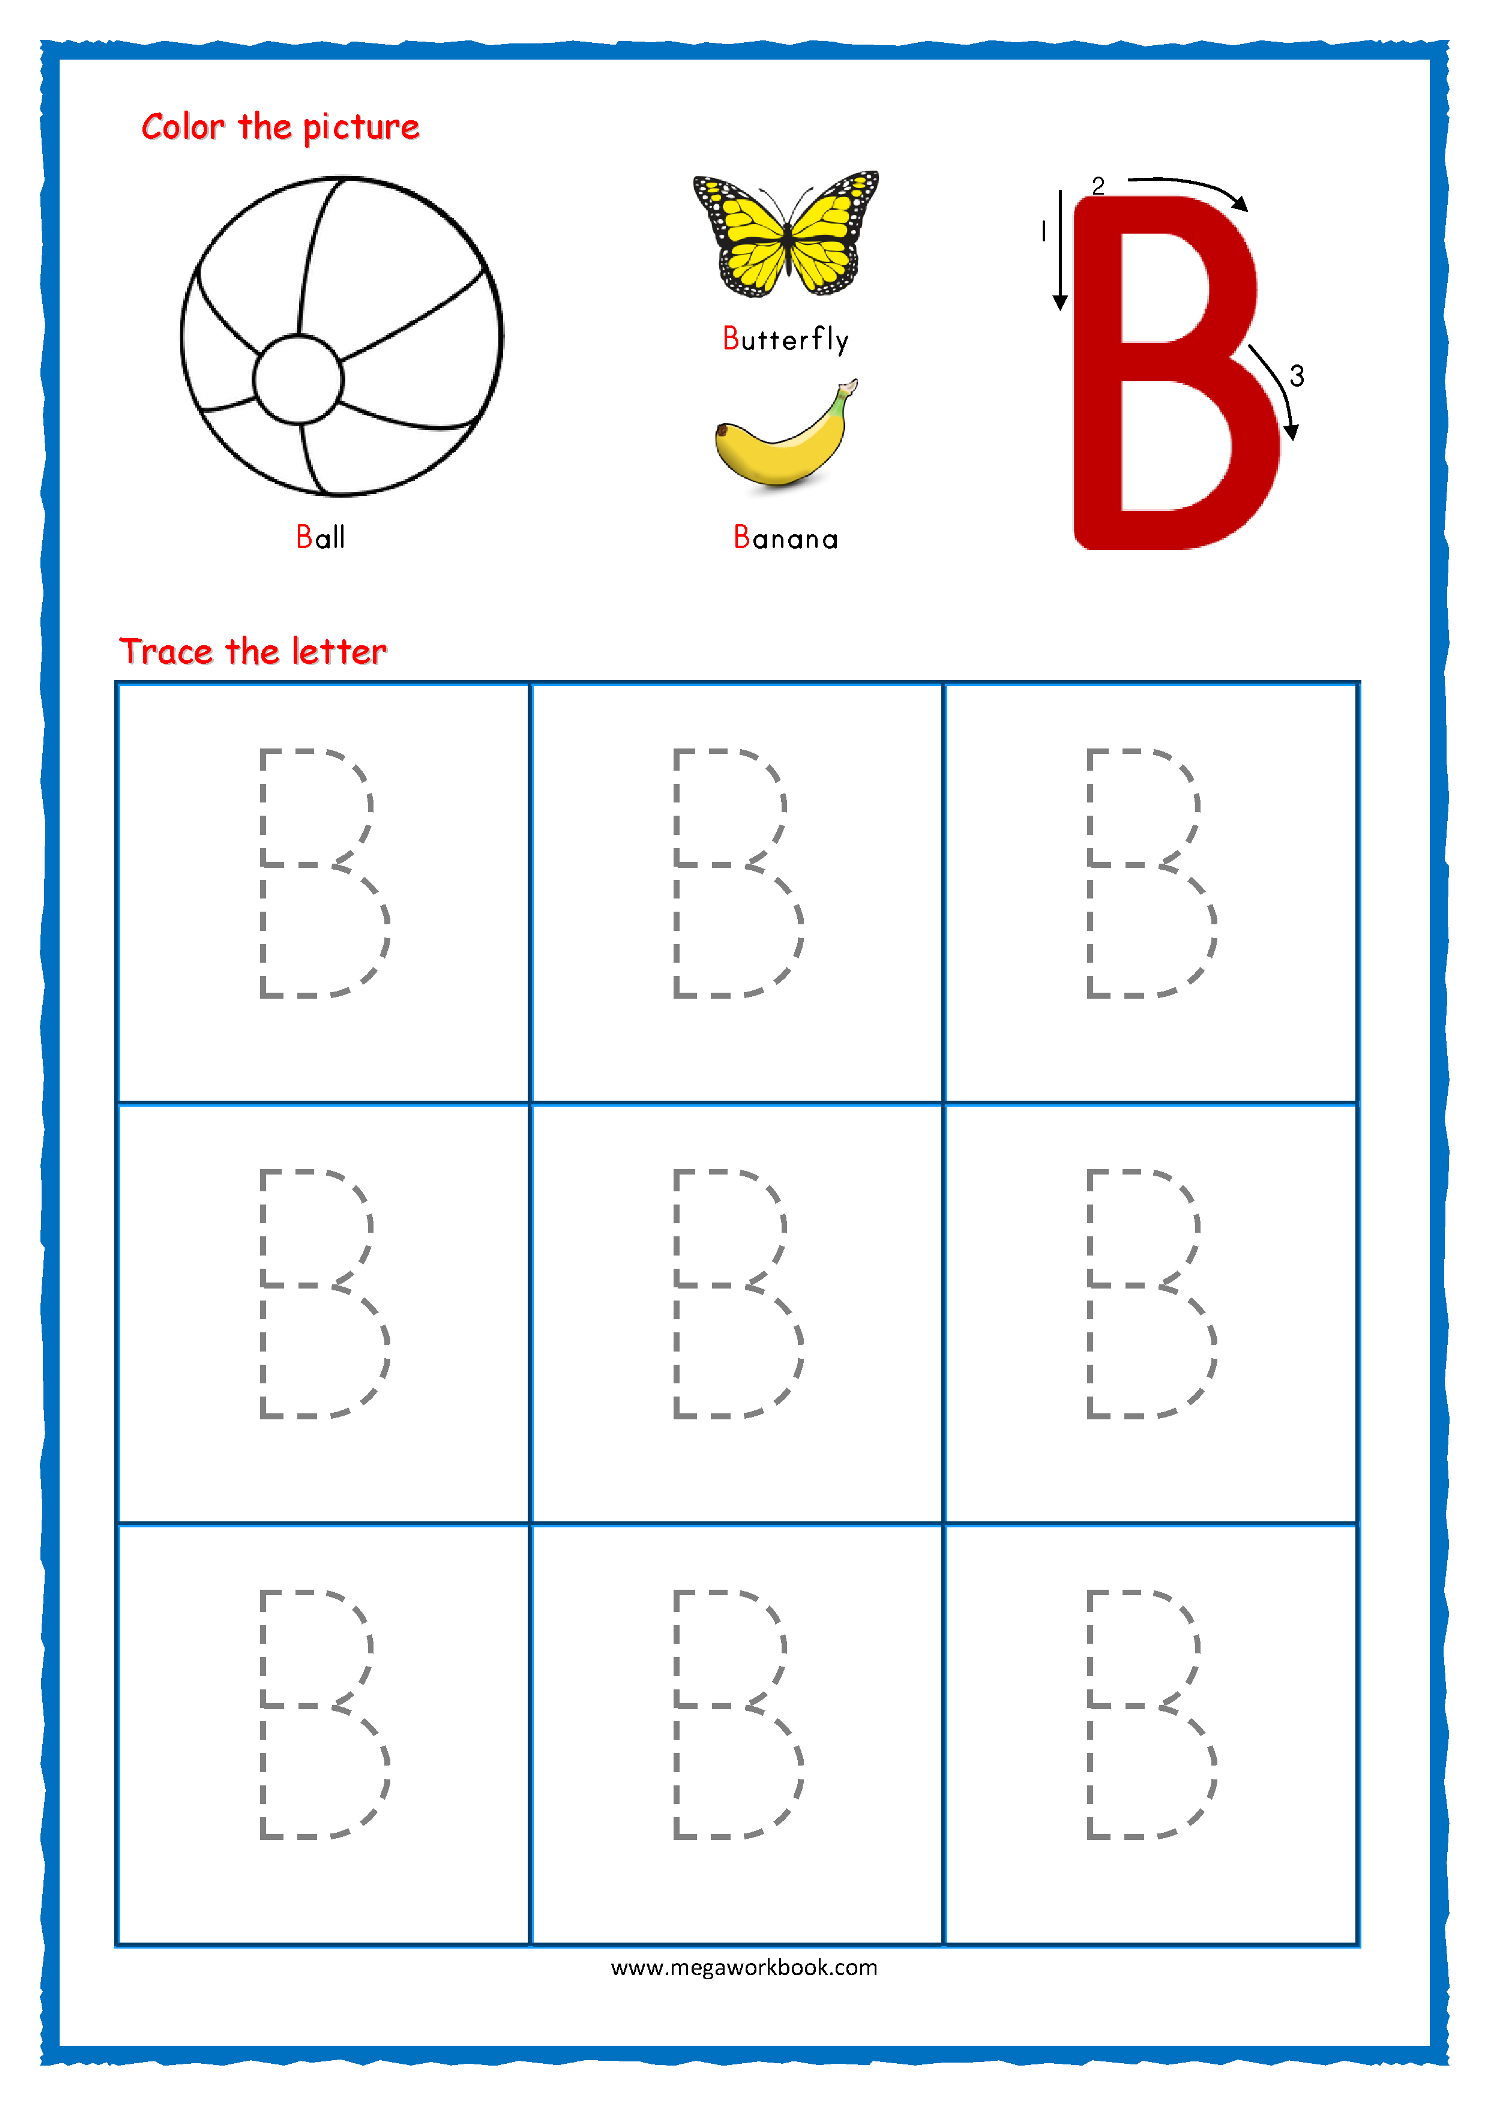 Coloring Book : Free Preschool Printables Coloring Book regarding Tracing Letters Of The Alphabet For Preschoolers